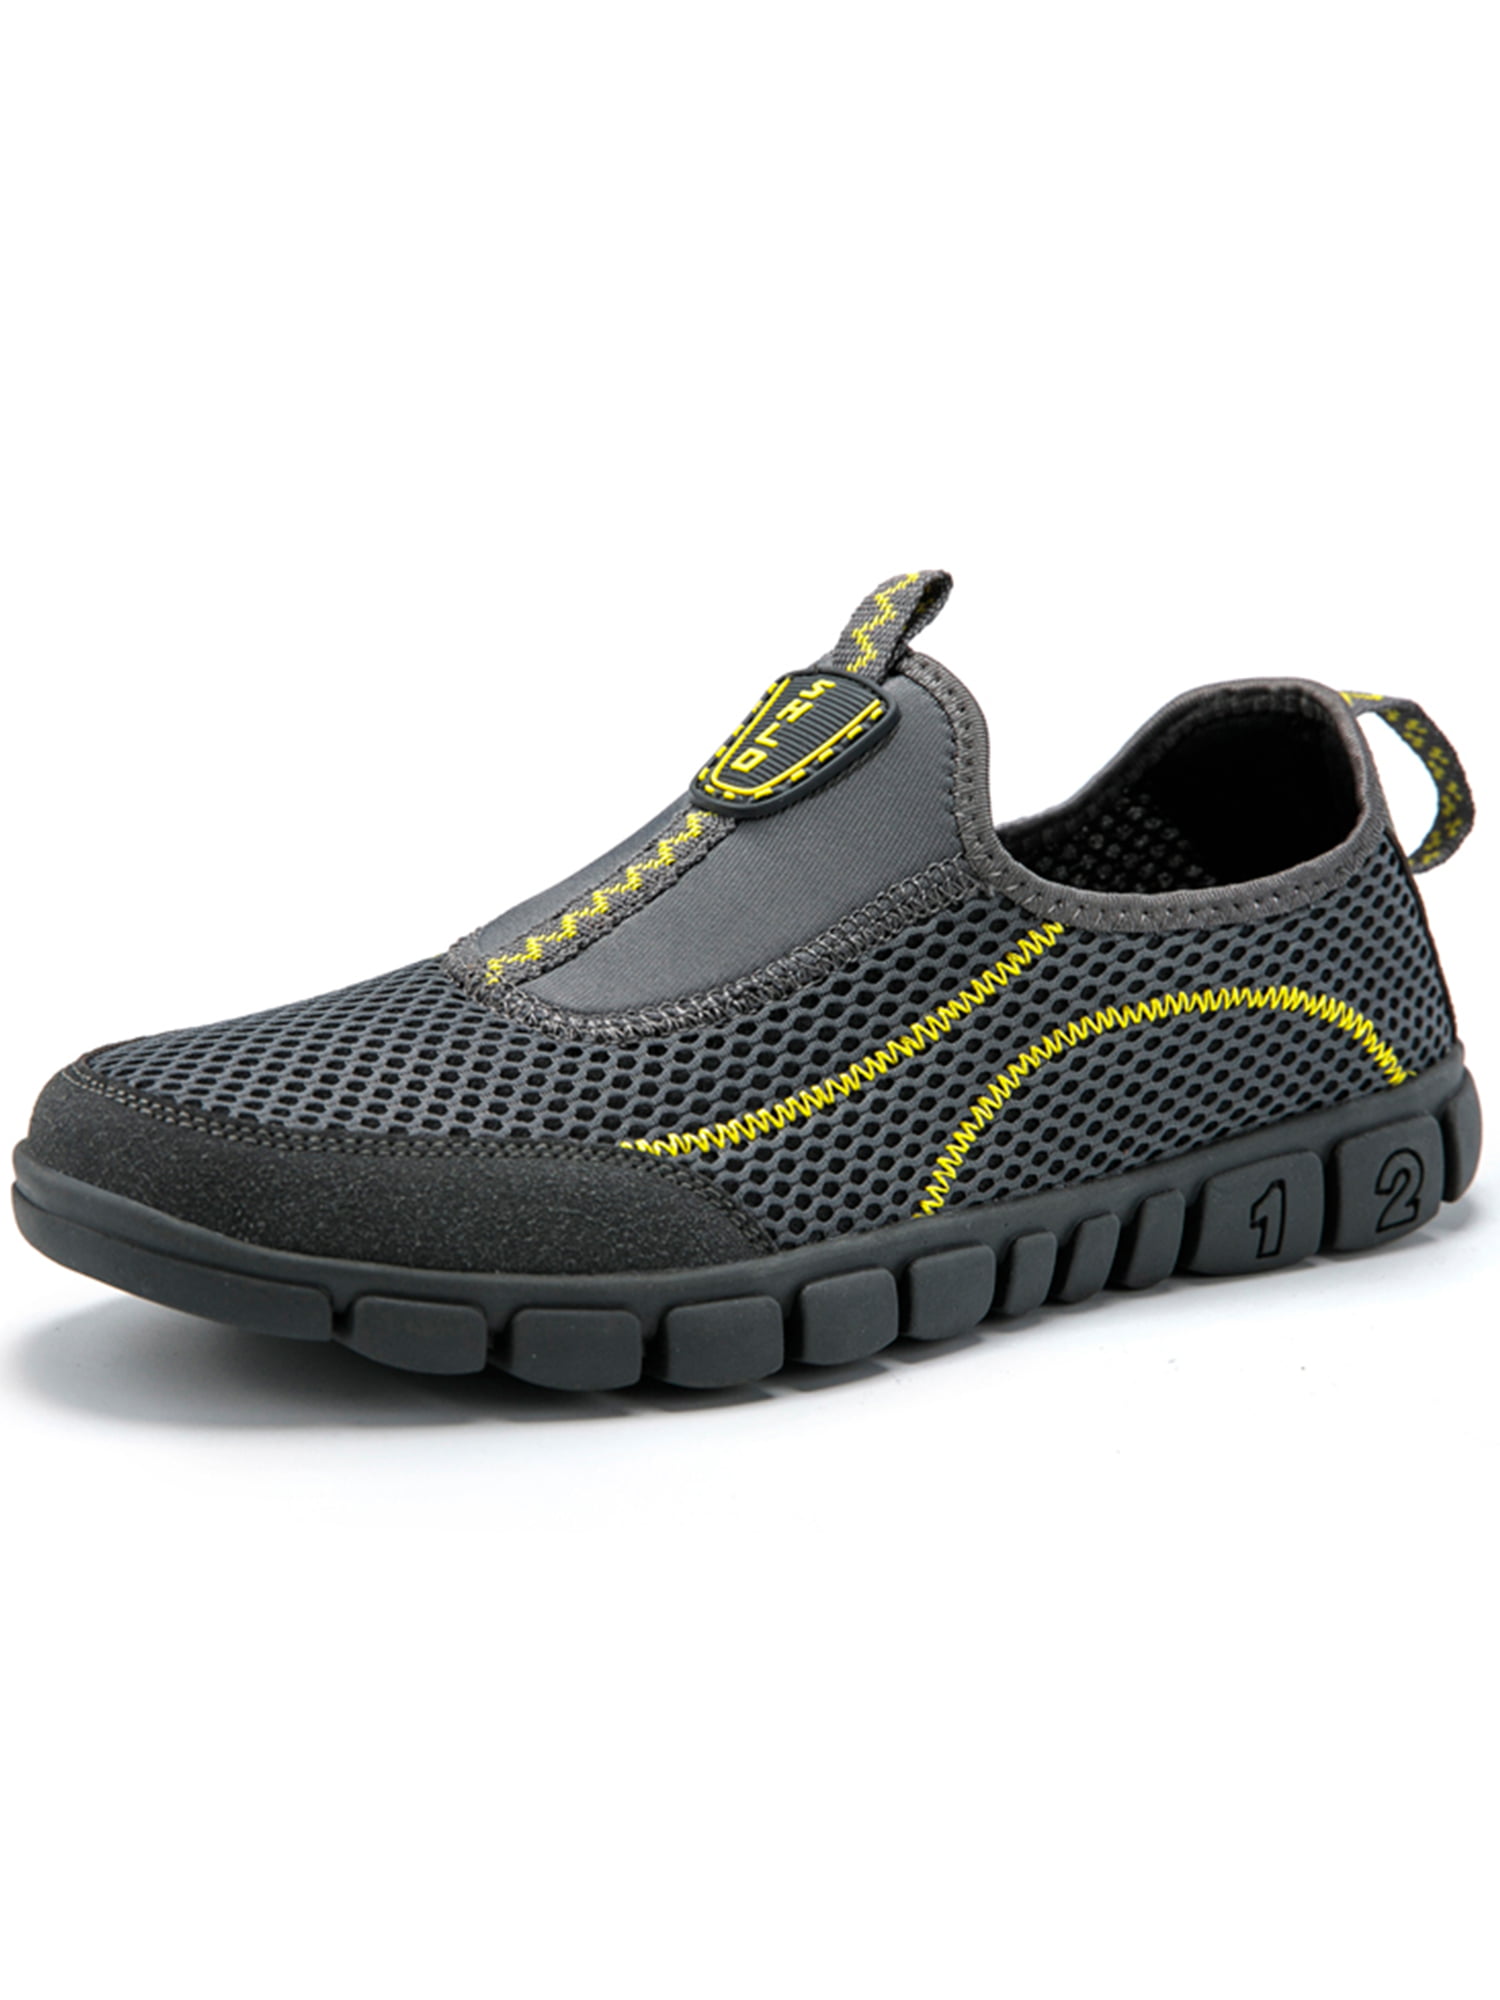 Unisex Lightweight Mesh Water Shoes Slip-on Quick Drying Aqua Beach Shoes 